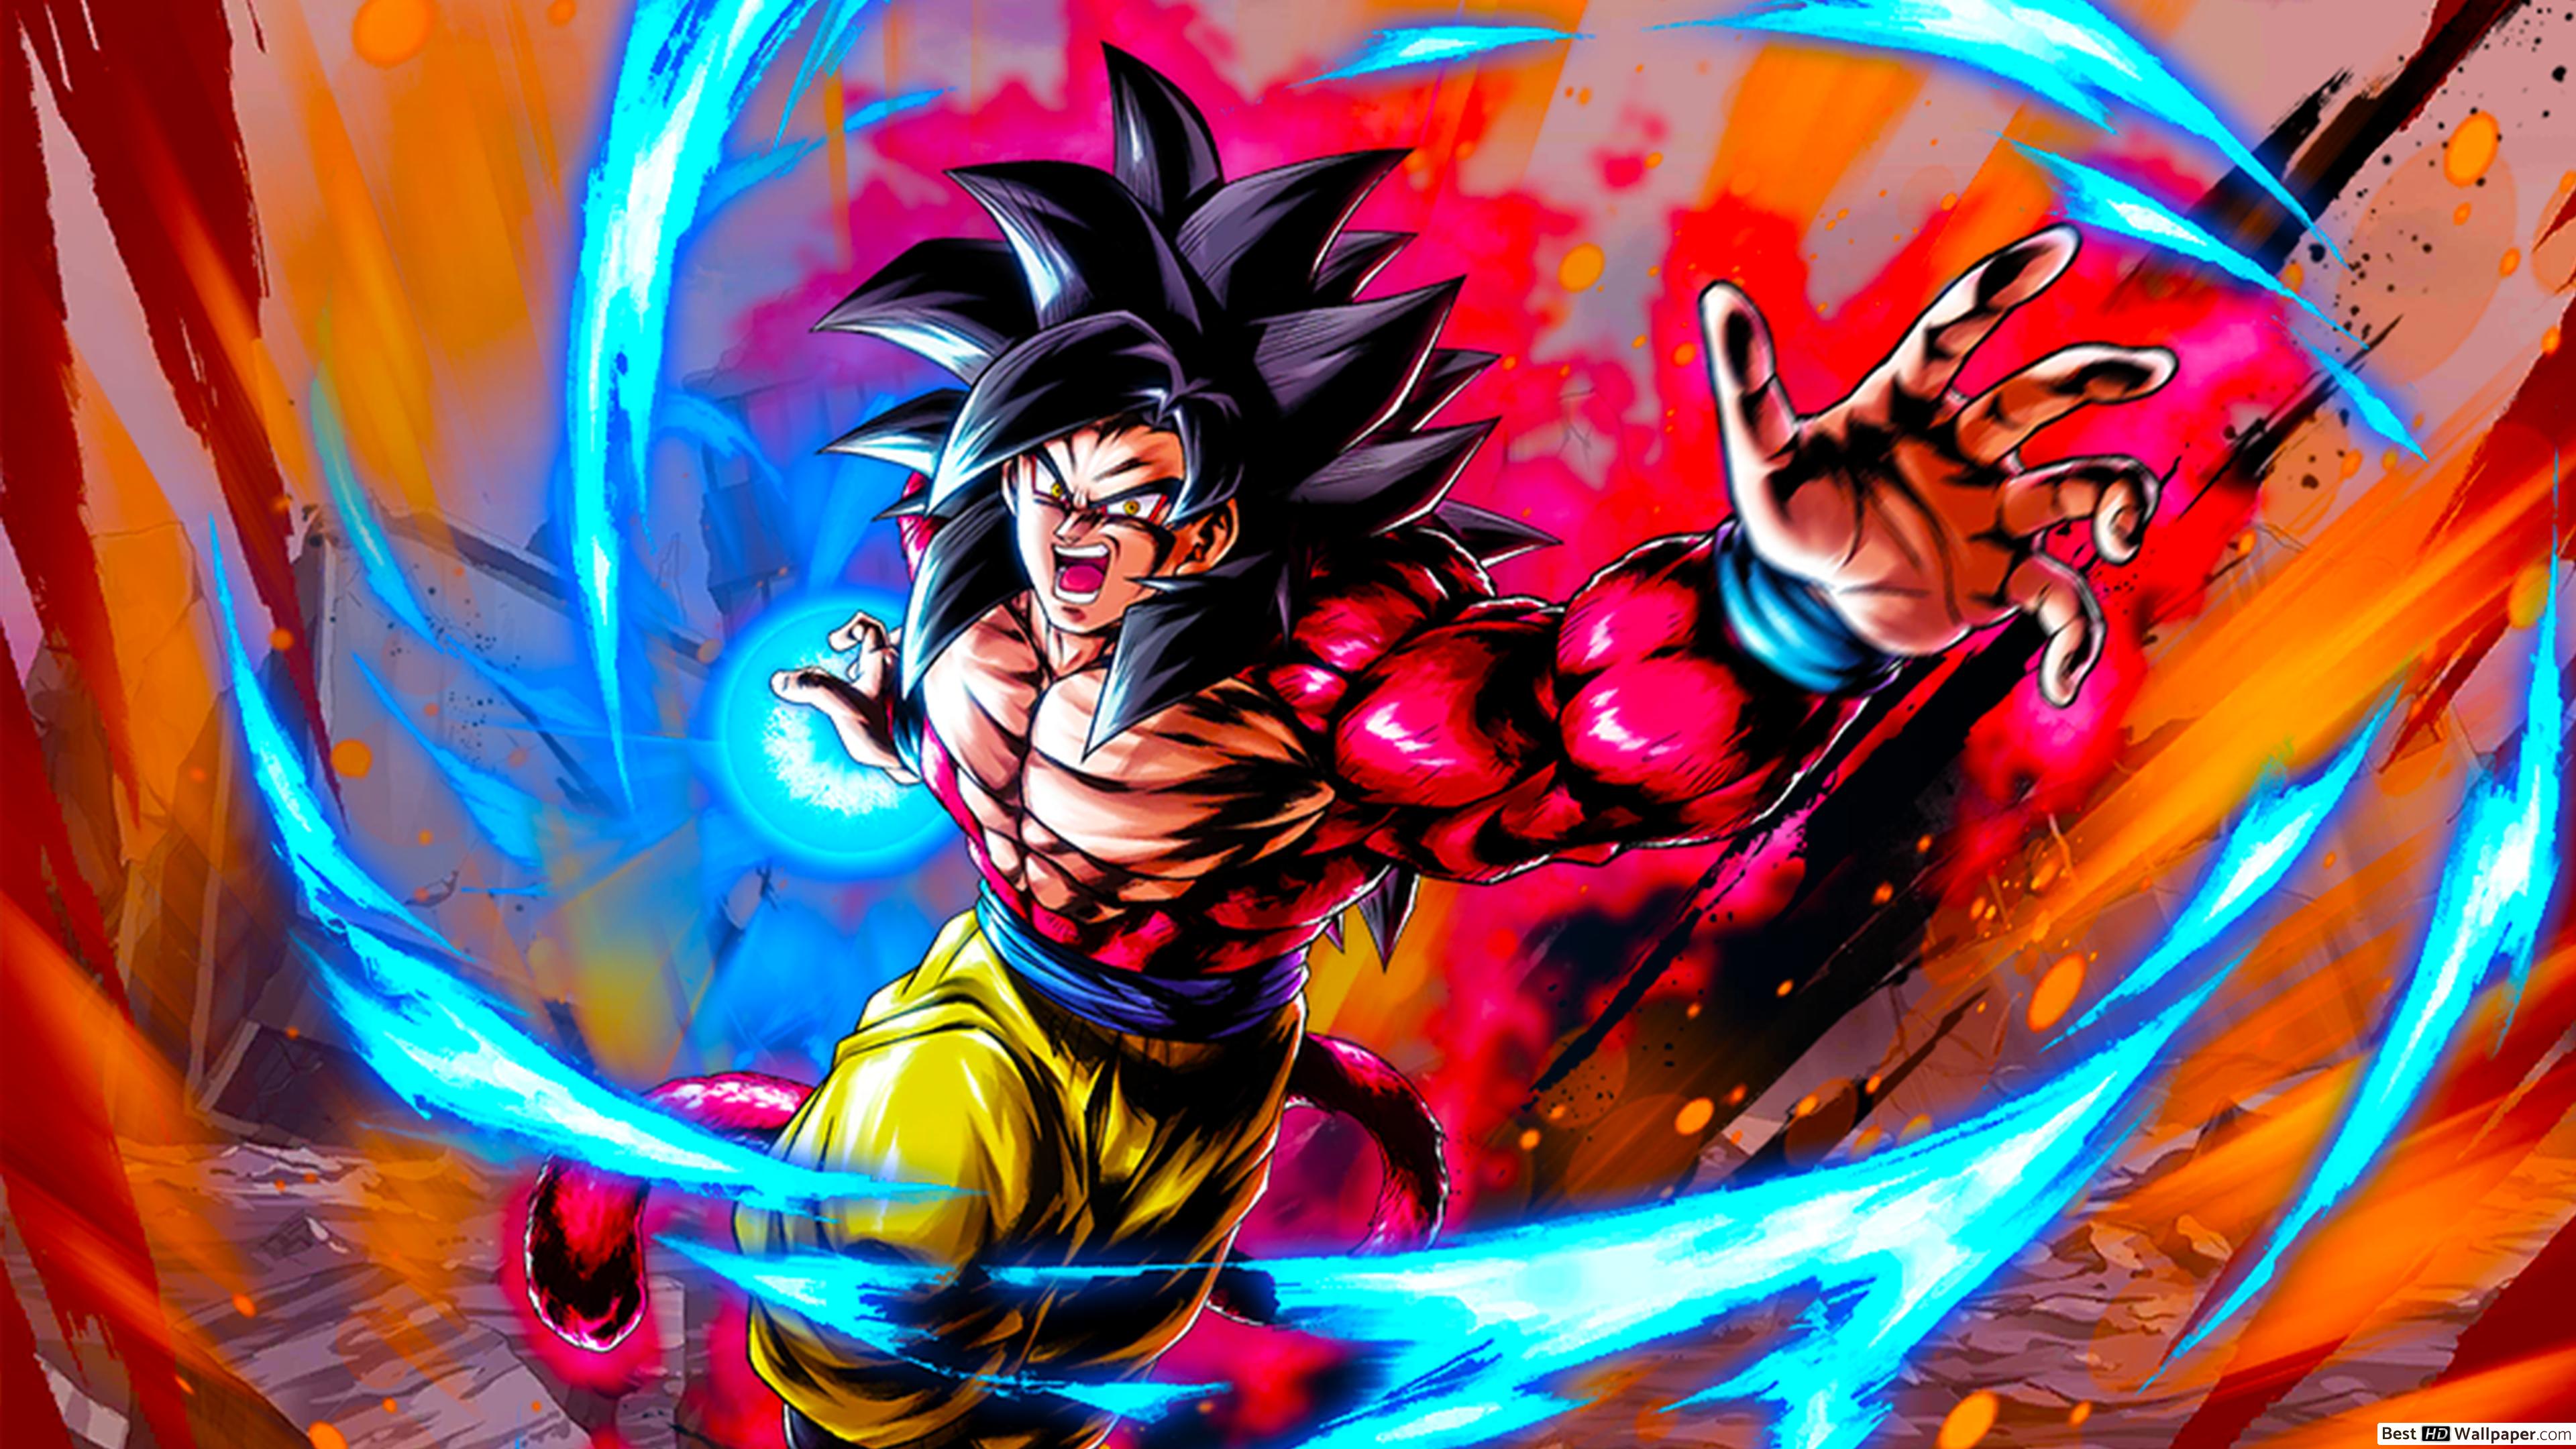 Full Power Super Saiyan 4 Goku from Dragon Ball GT [Dragon Ball Legends Arts] for Desktop HD wallpaper download